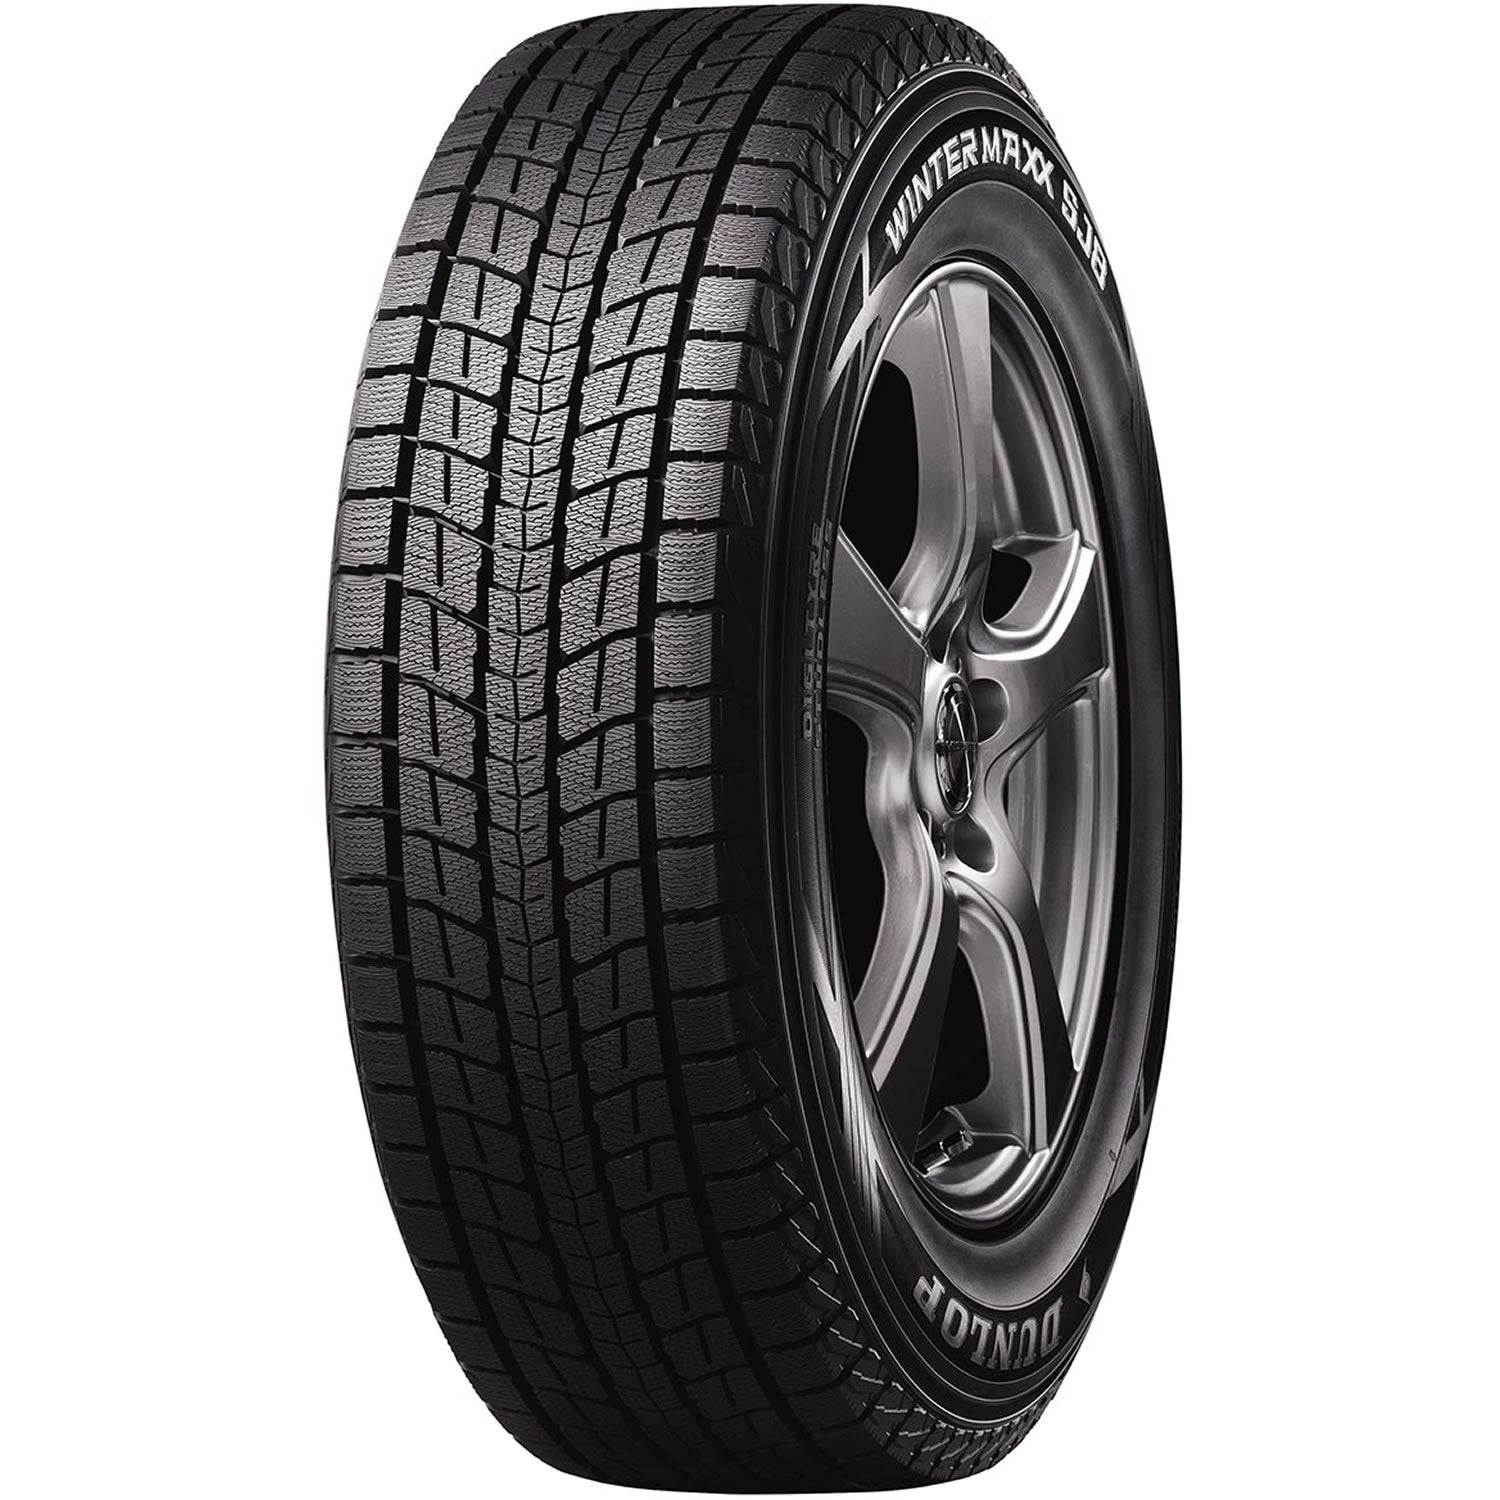 DUNLOP WINTER MAXX SJ8 235/60R18 (29.1X9.3R 18) Tires